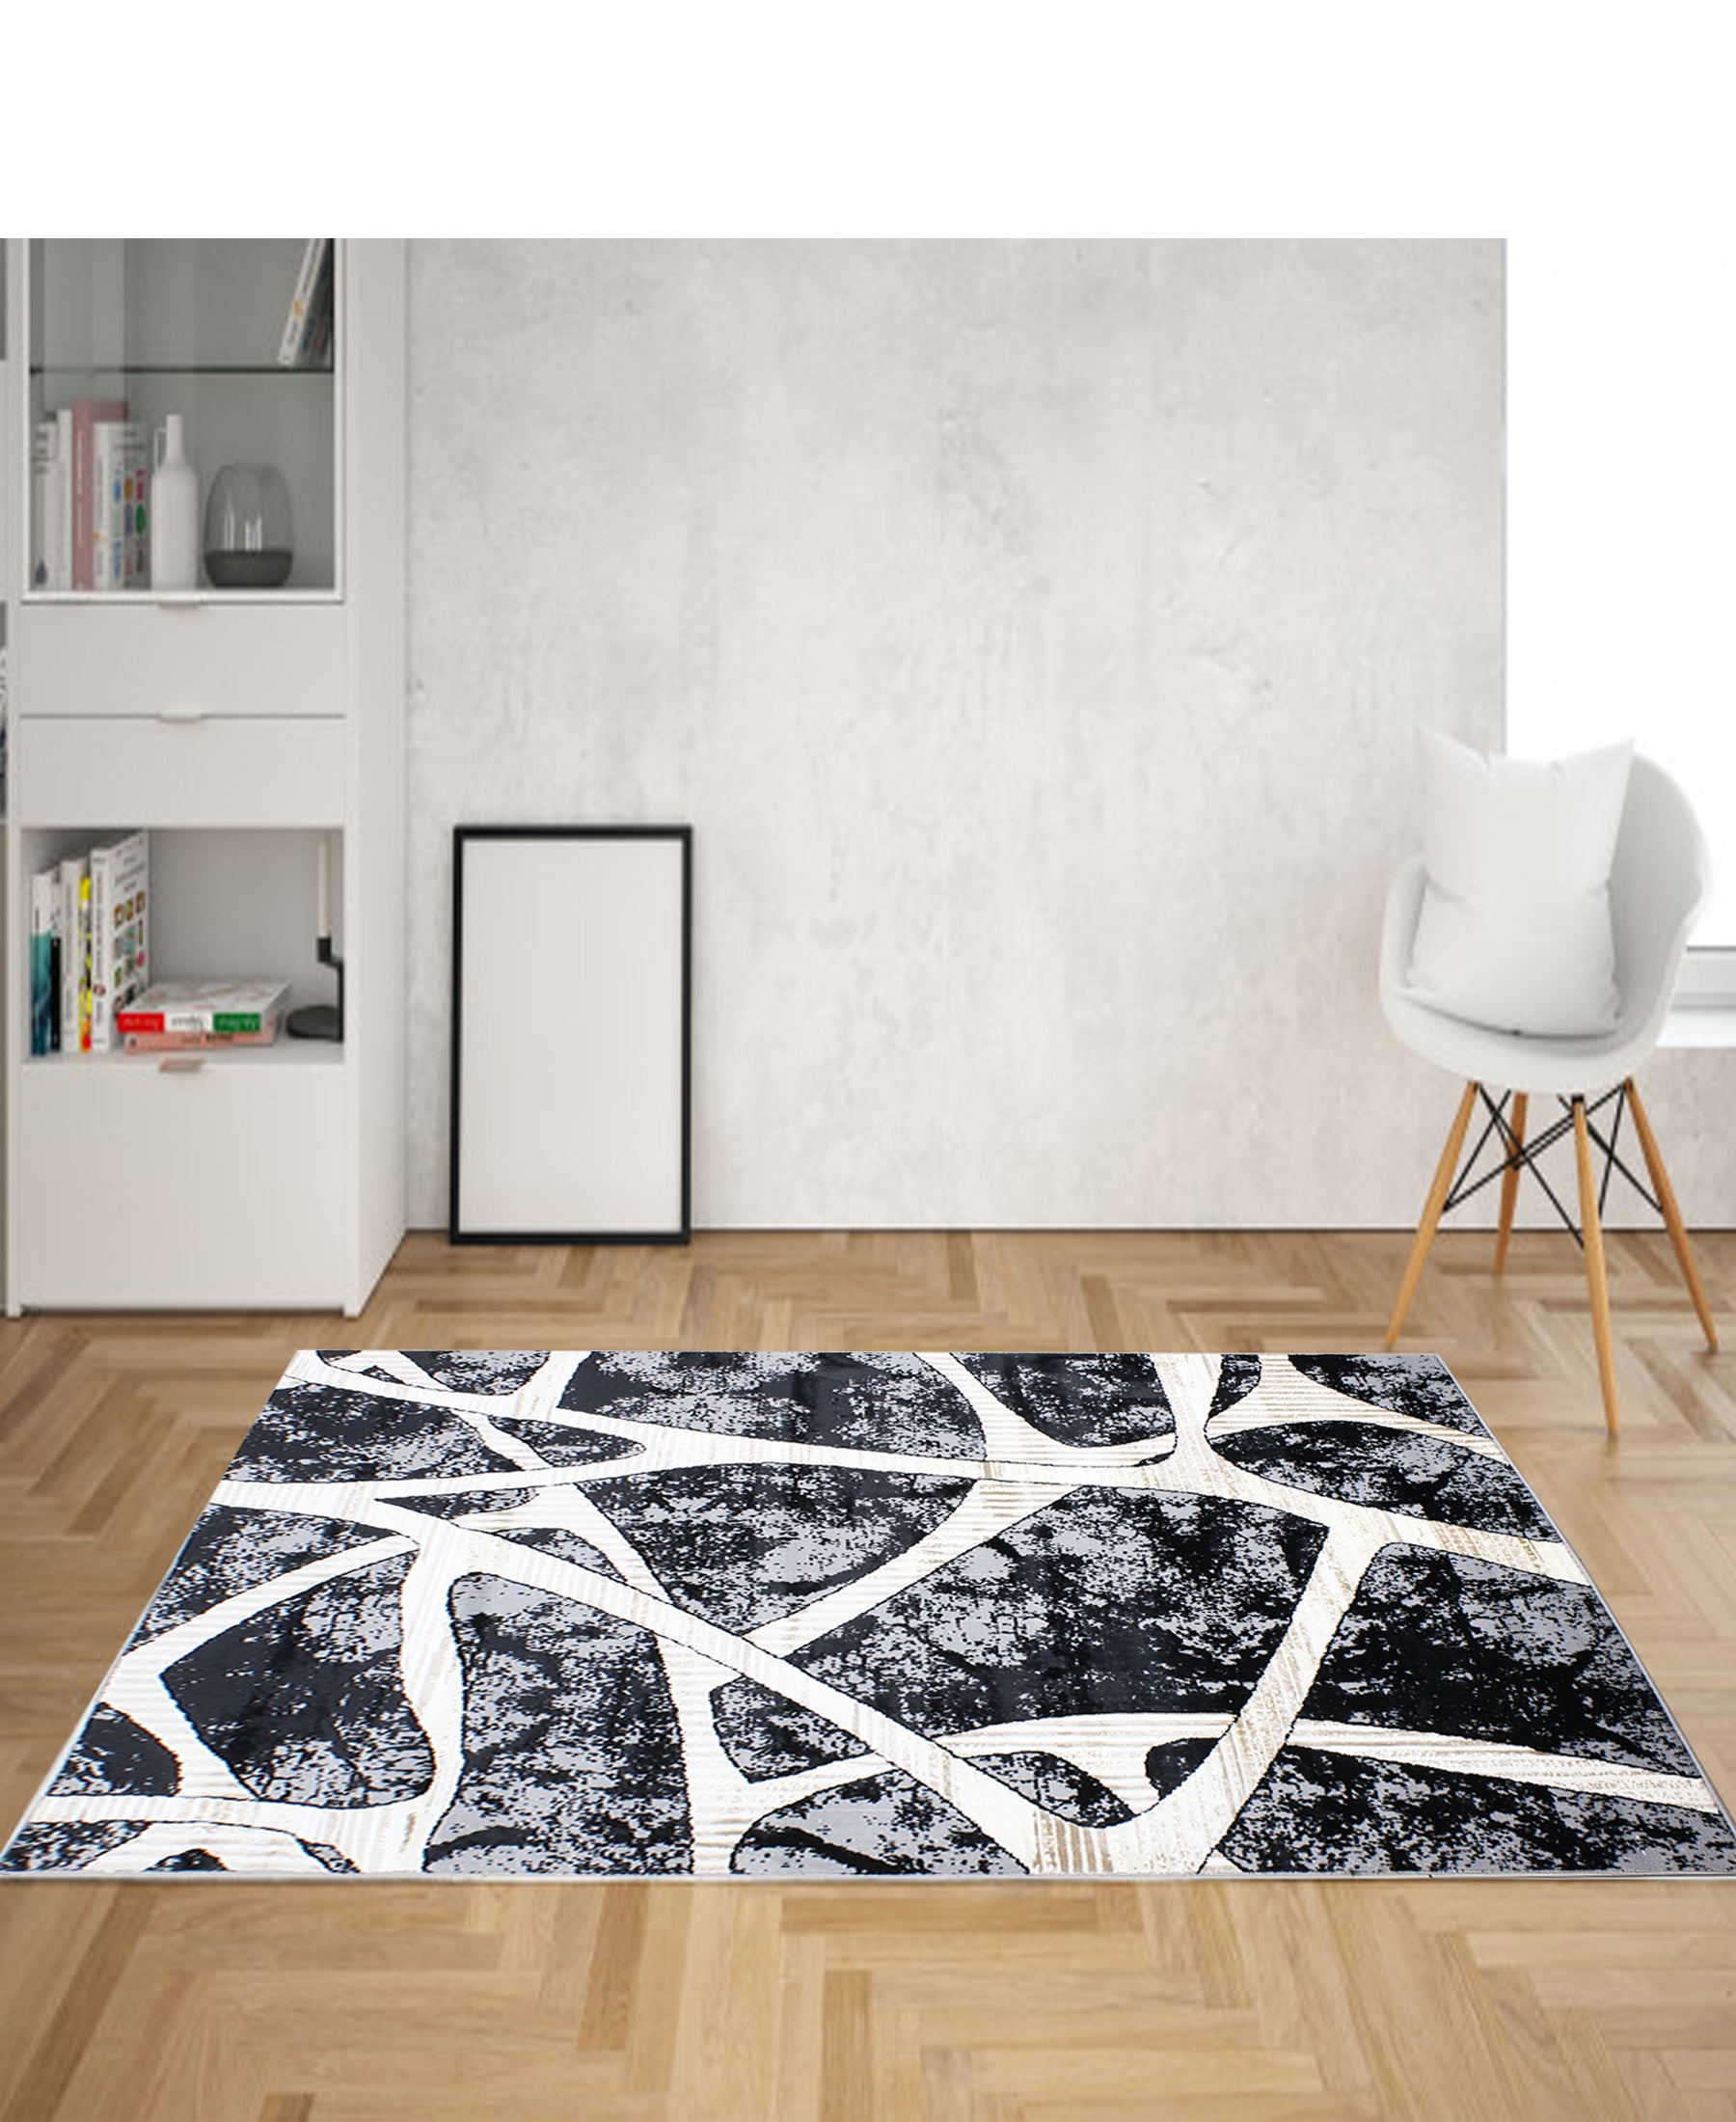 Damascus Swerve Carpet 2000mm x 2700mm - Black & Grey